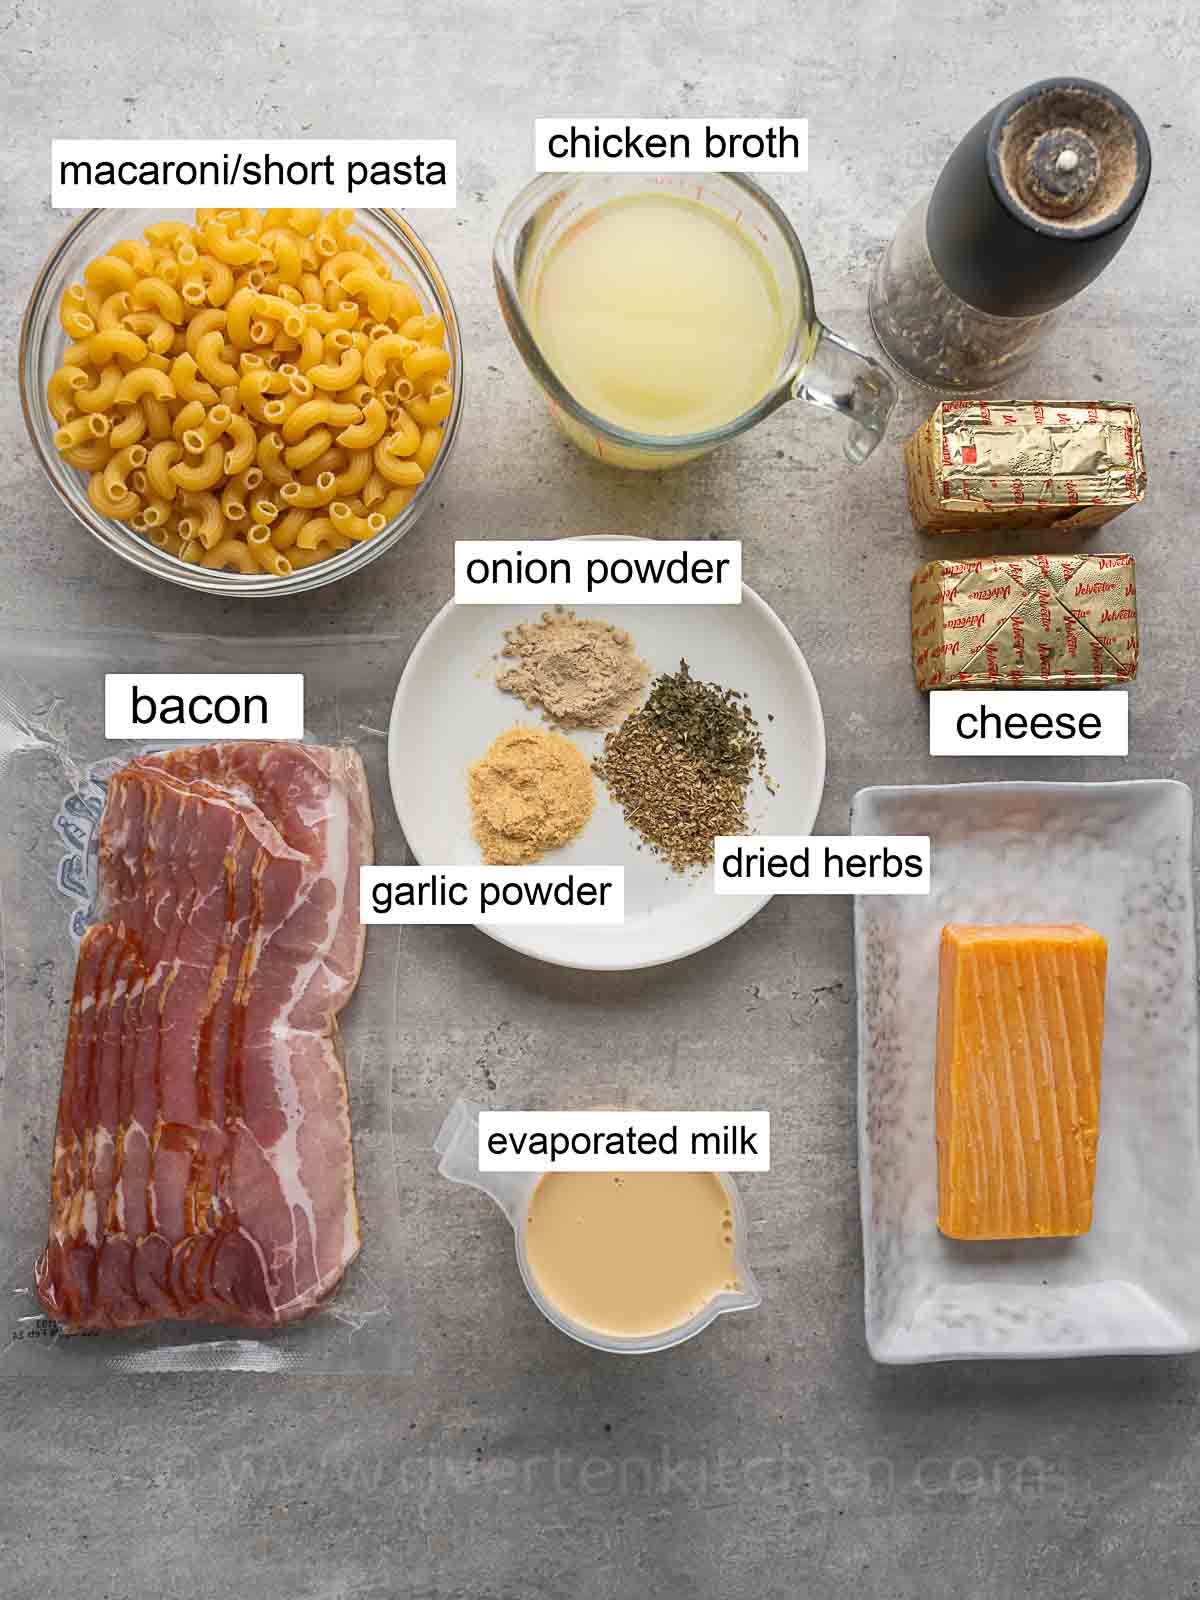 macaroni pasta, chicken broth, streaky bacon, velveeta cheese, evaporated milk, onion powder, garlic powder, and dried herbs.